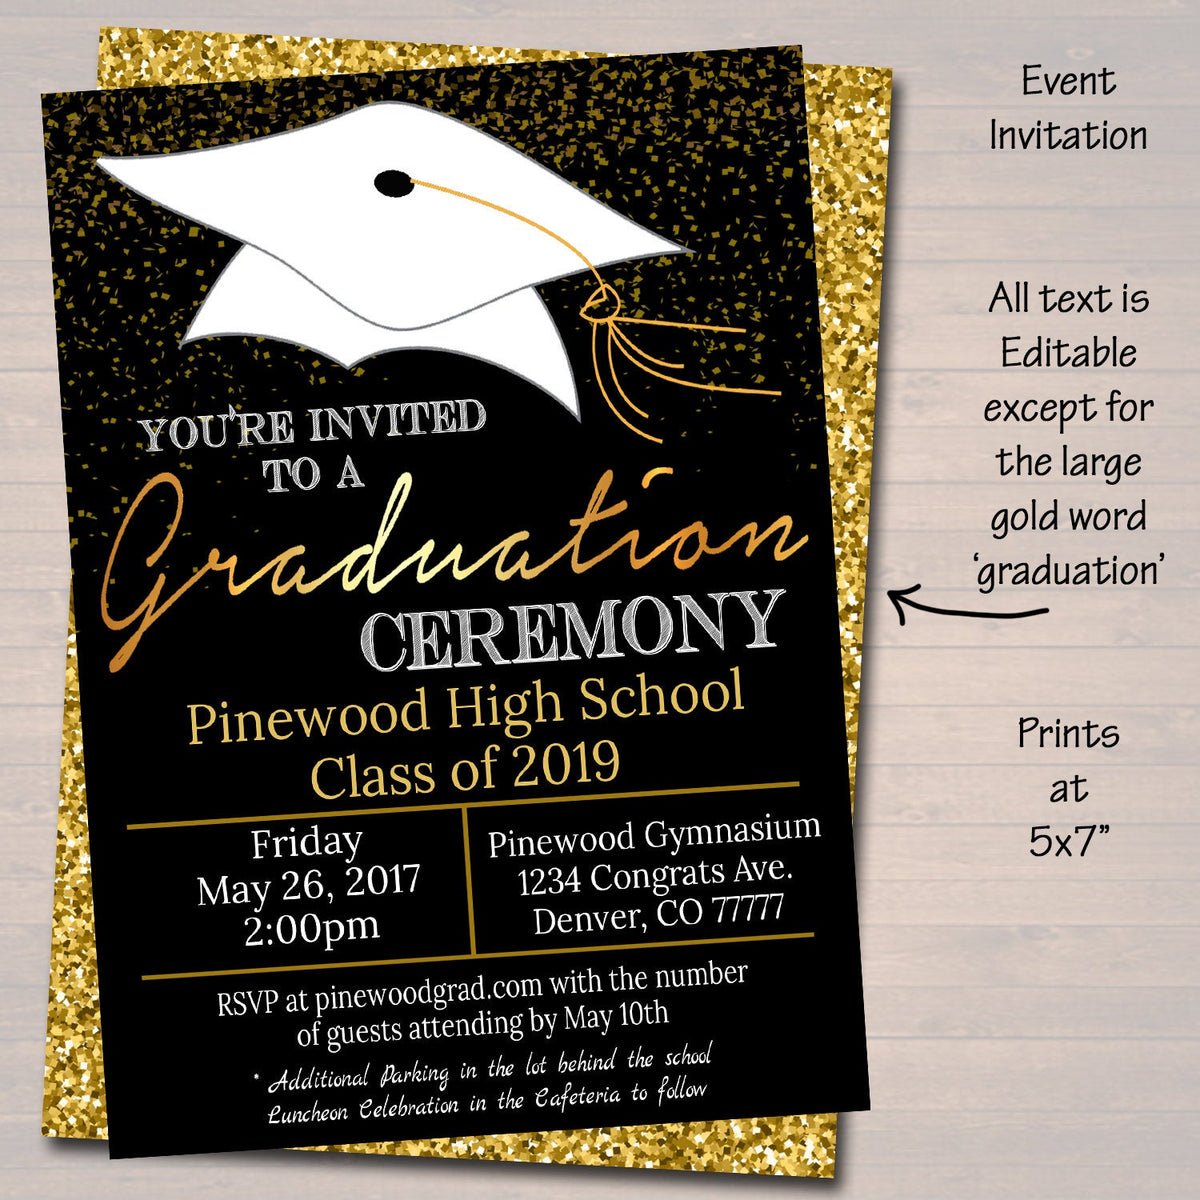 free-printable-graduation-invitation-for-preschool